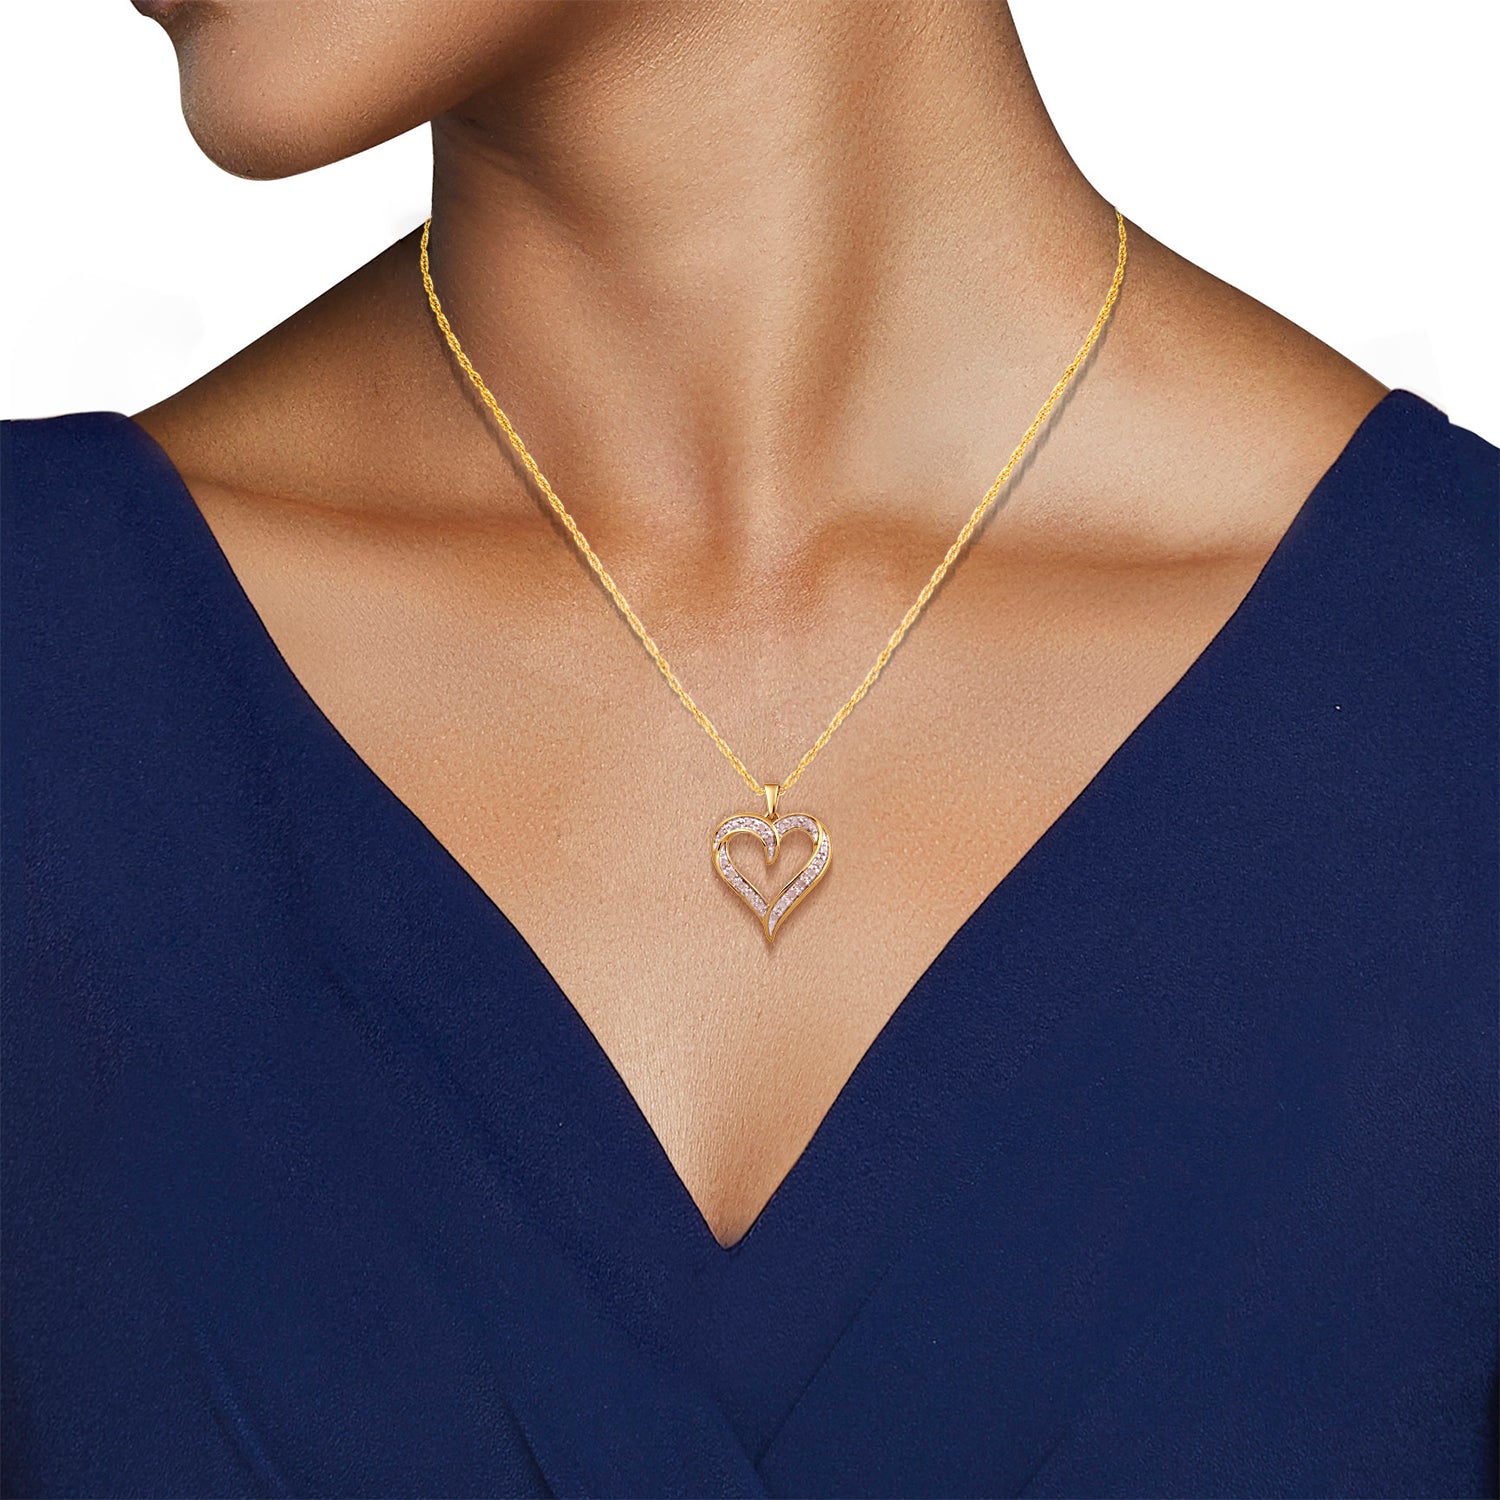 Jewelili Diamond Heart Pendant Necklace Sterling Silver Yellow